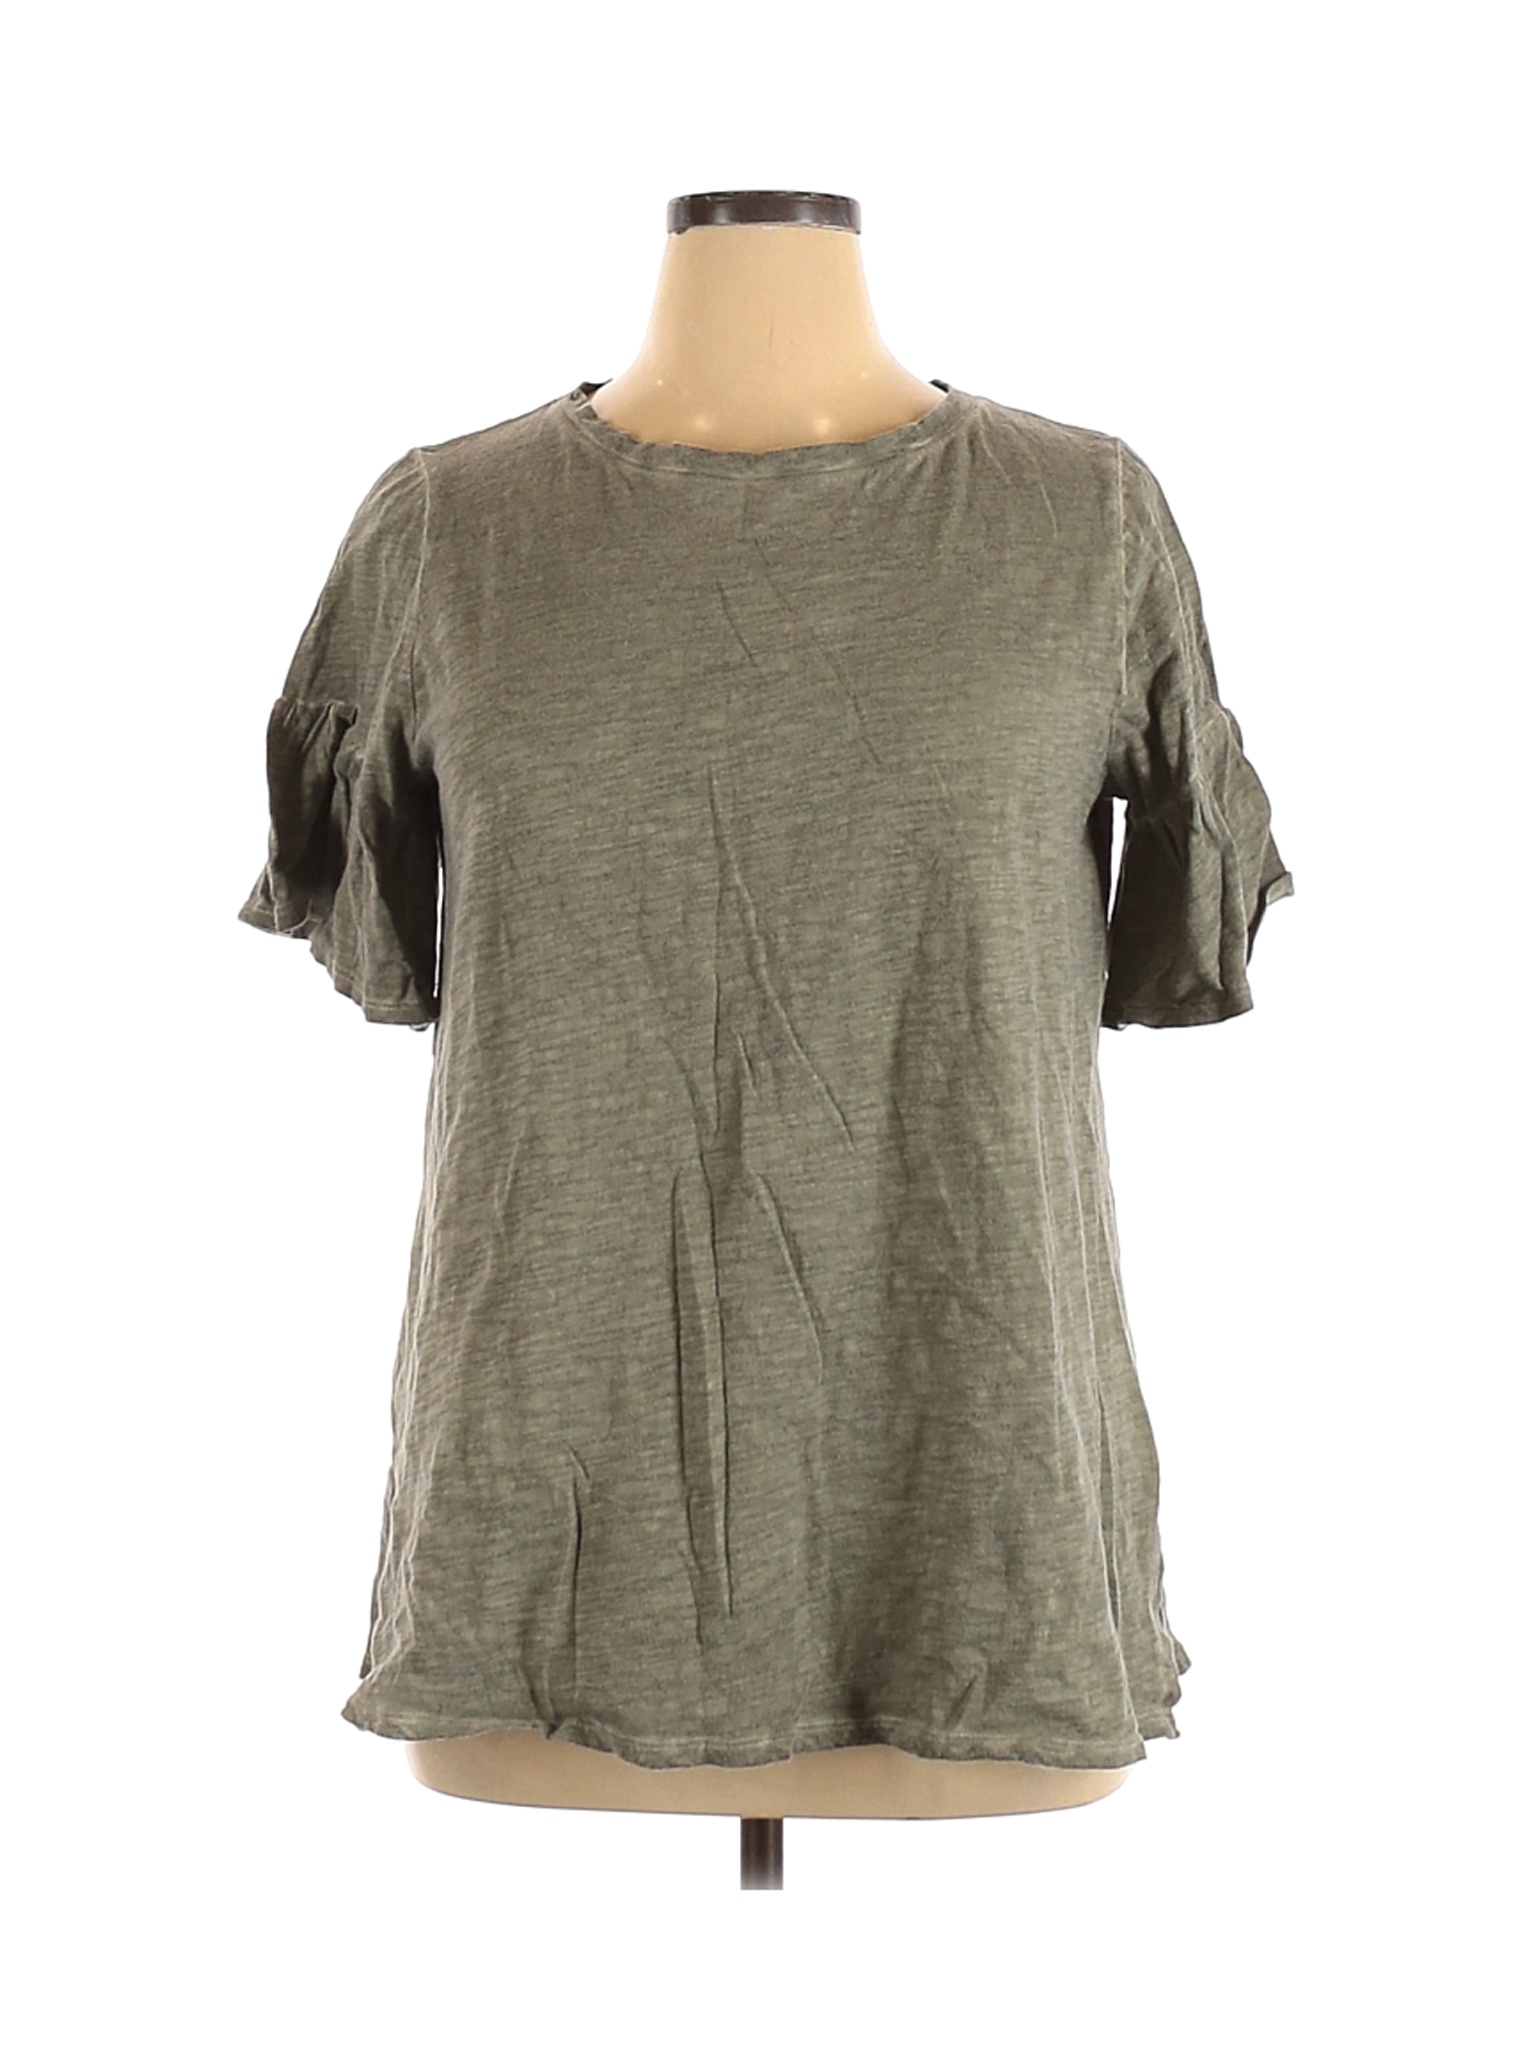 Lane Bryant Women Green Short Sleeve T-Shirt 14 Plus | eBay